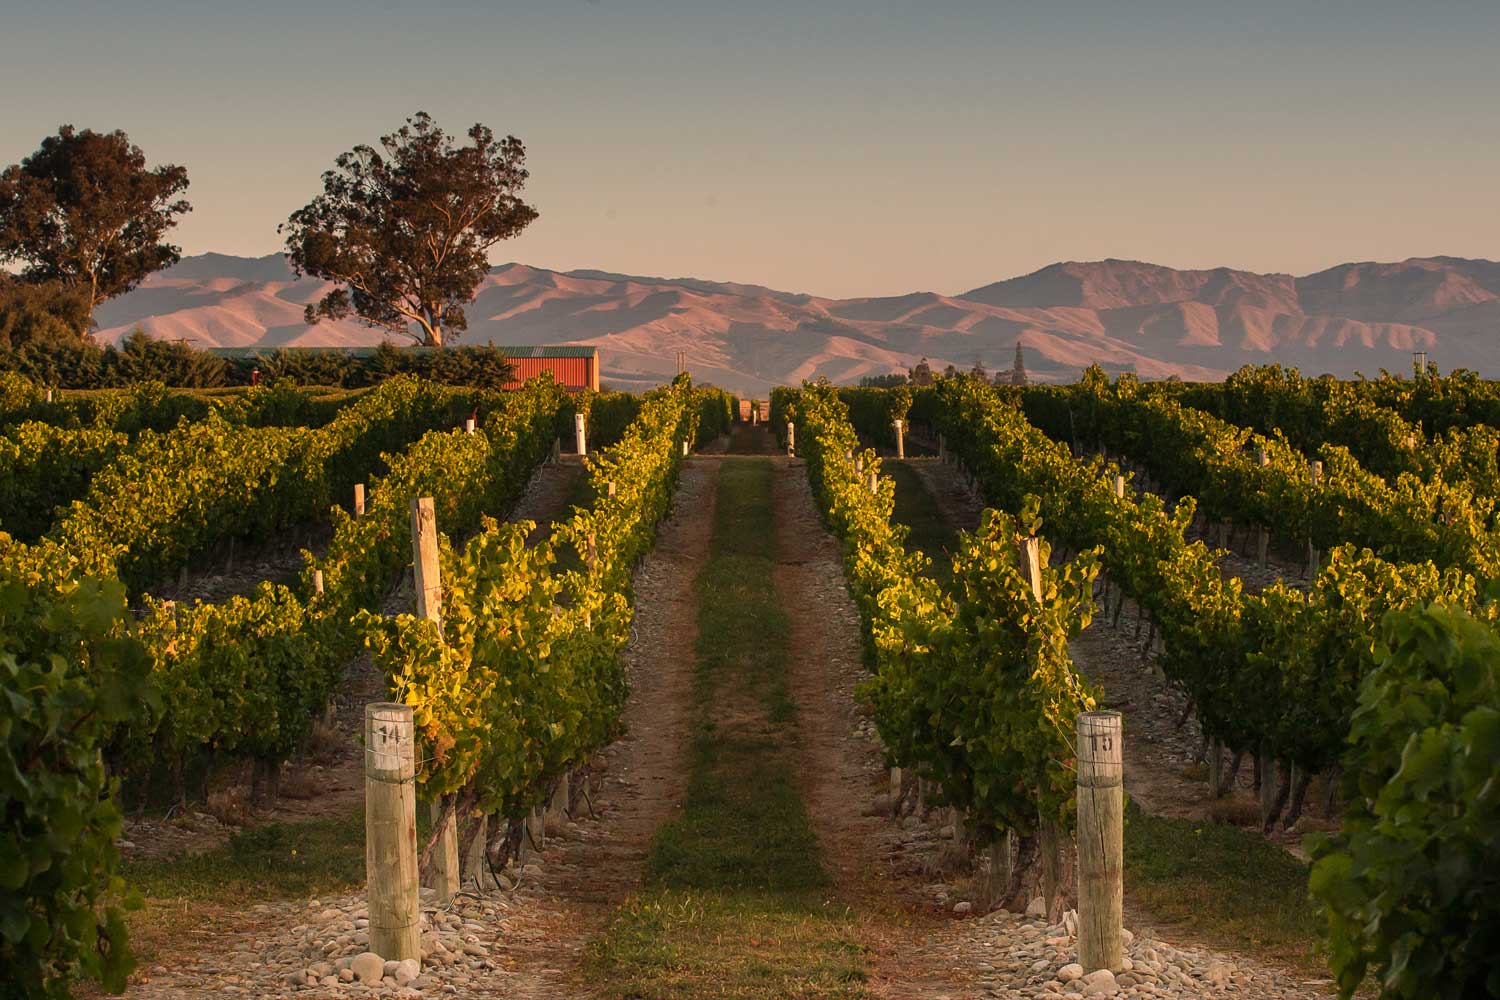 Image of a vineyard